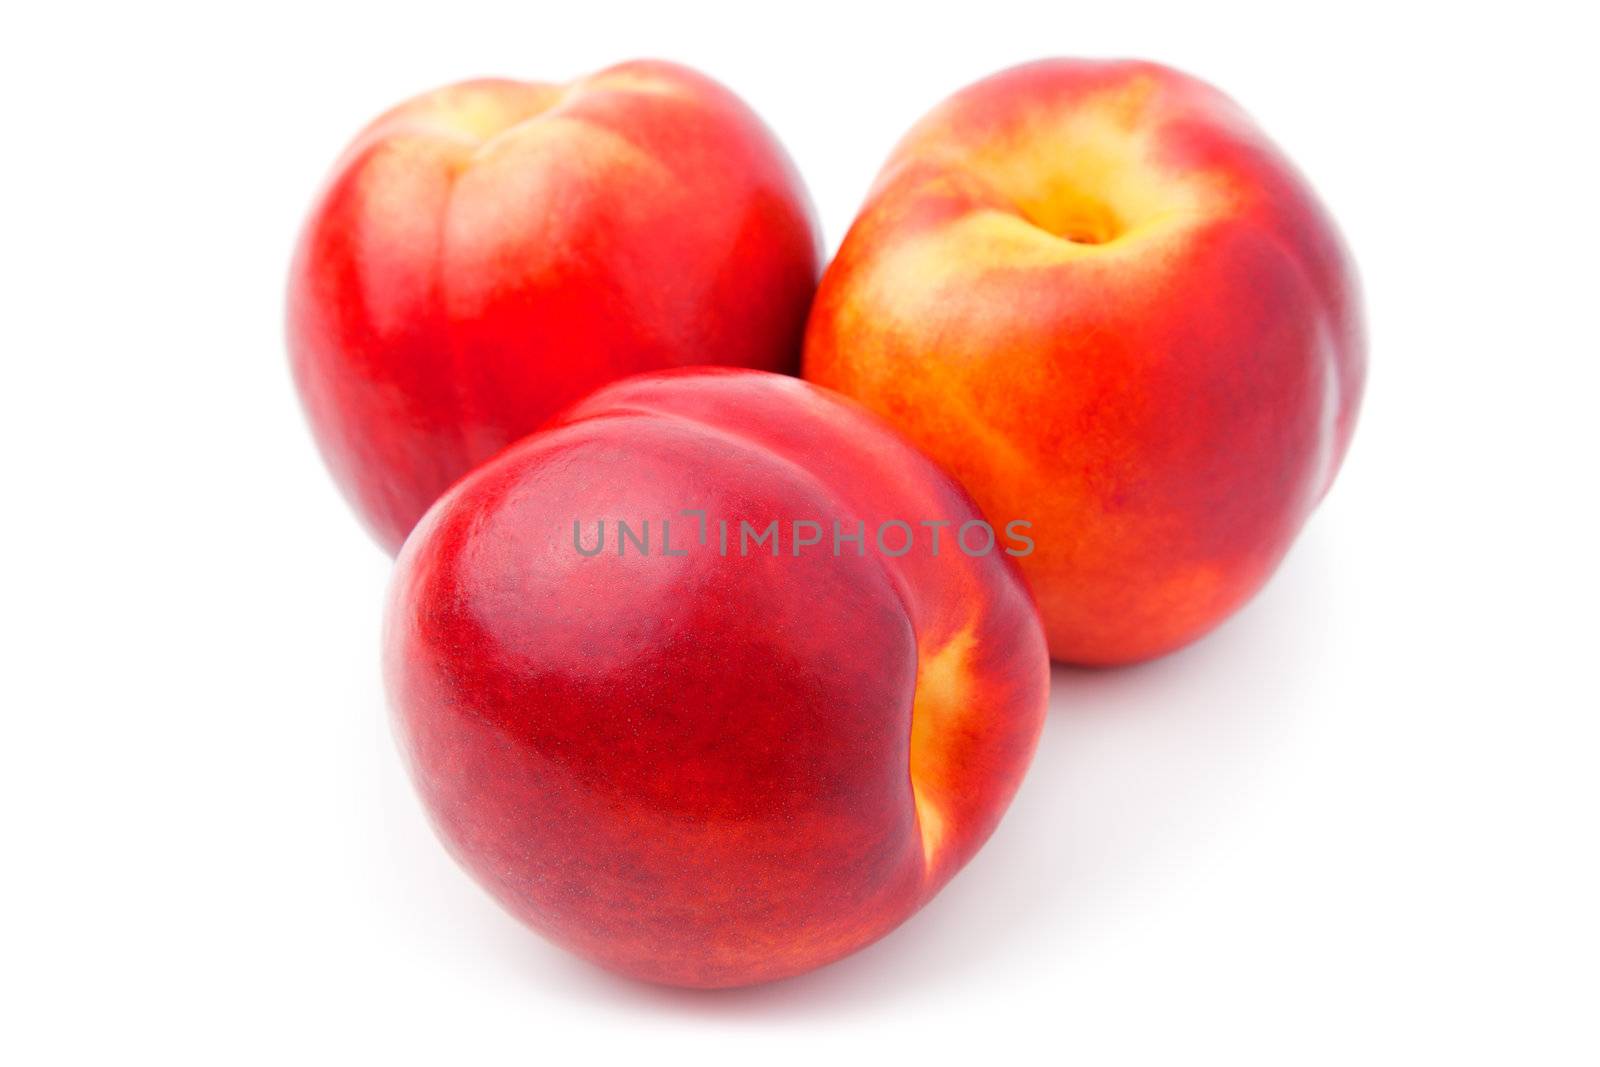 Ripe peach on a white background  by motorolka